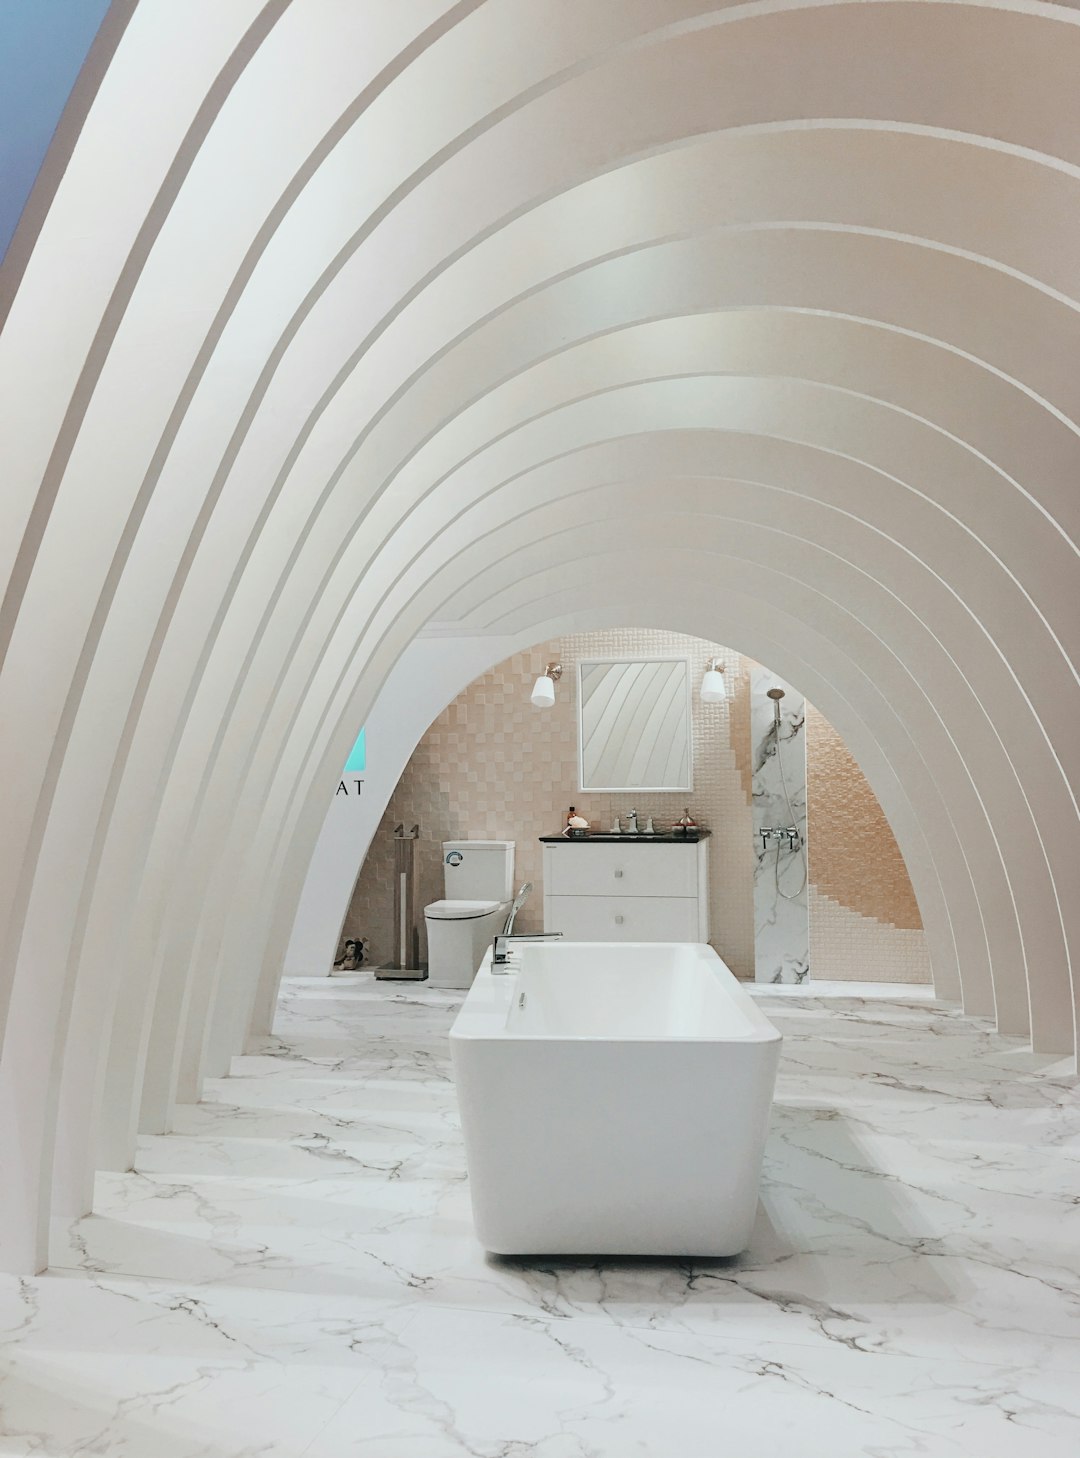 white ceramic bathtub